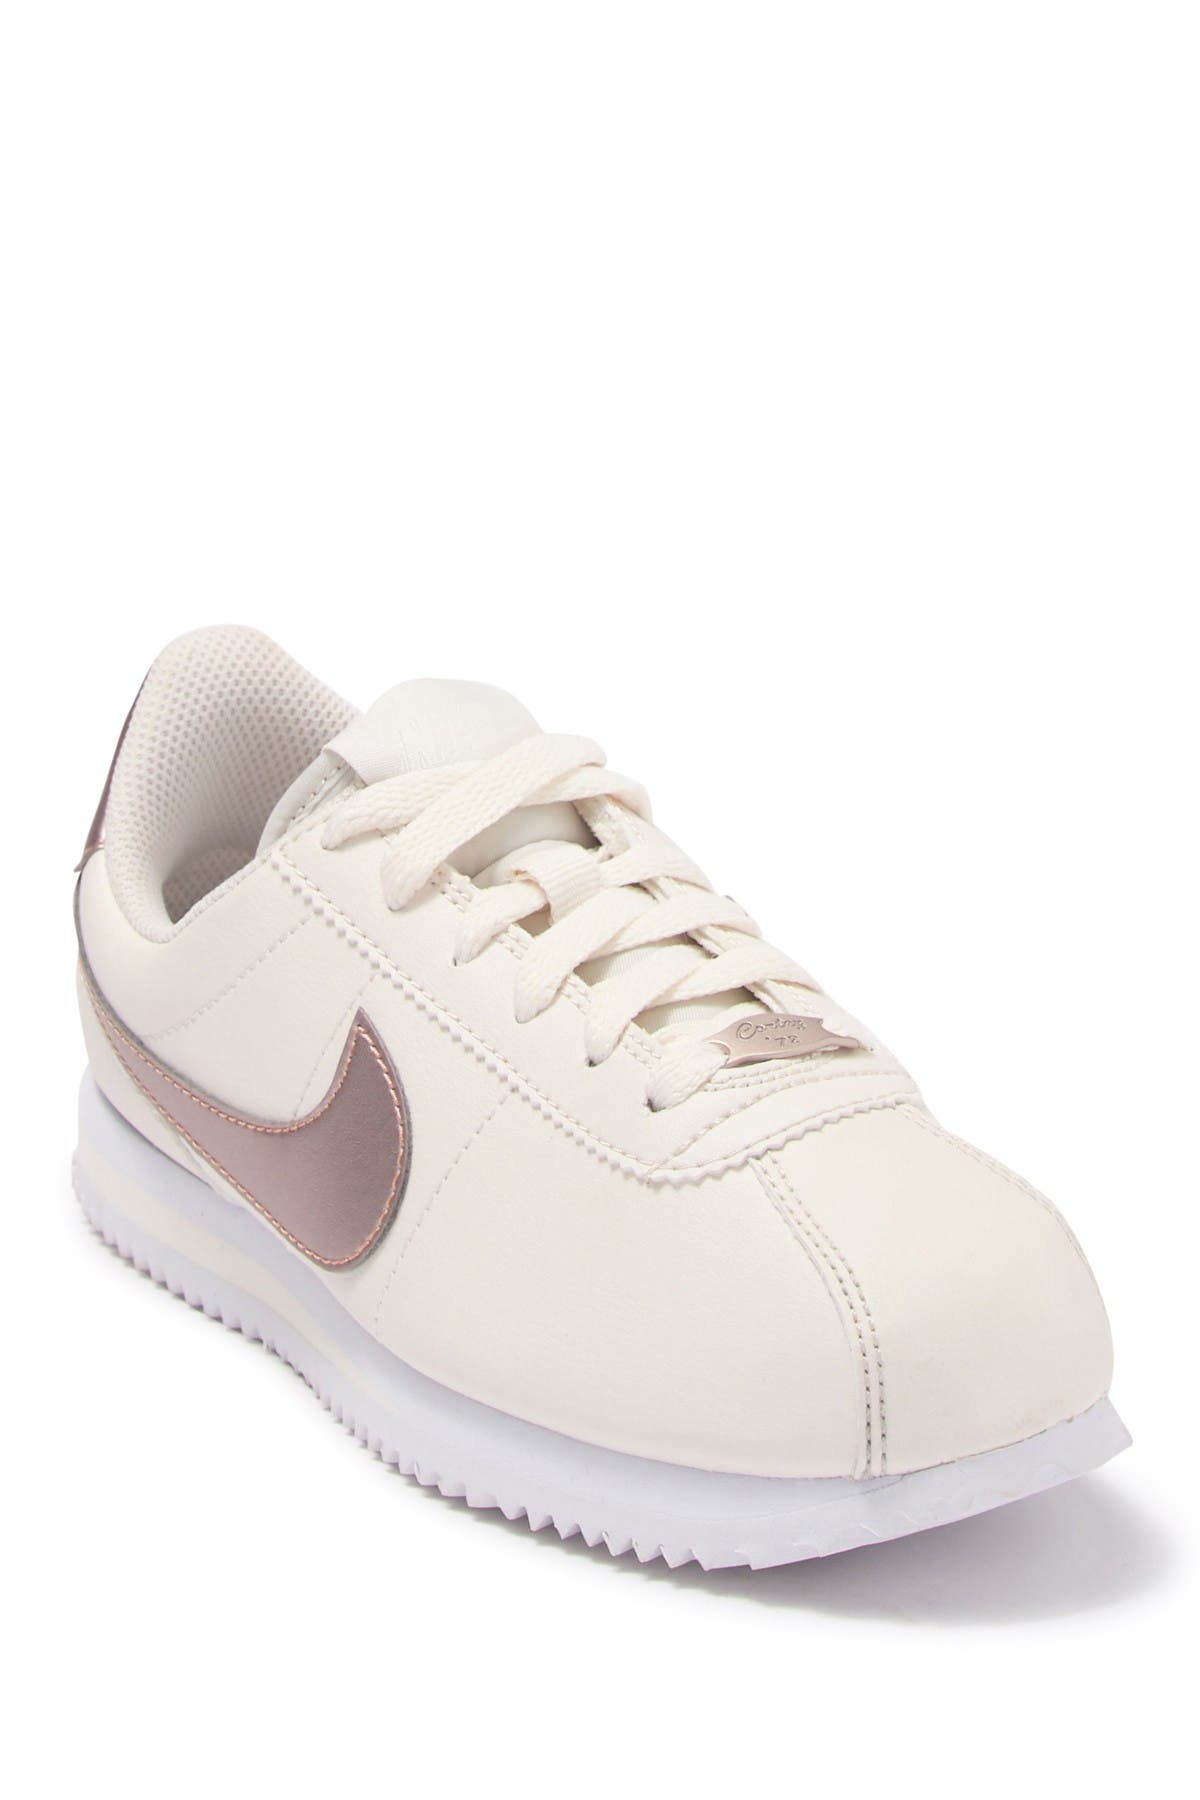 Nike | Cortez Basic SL Sneaker 